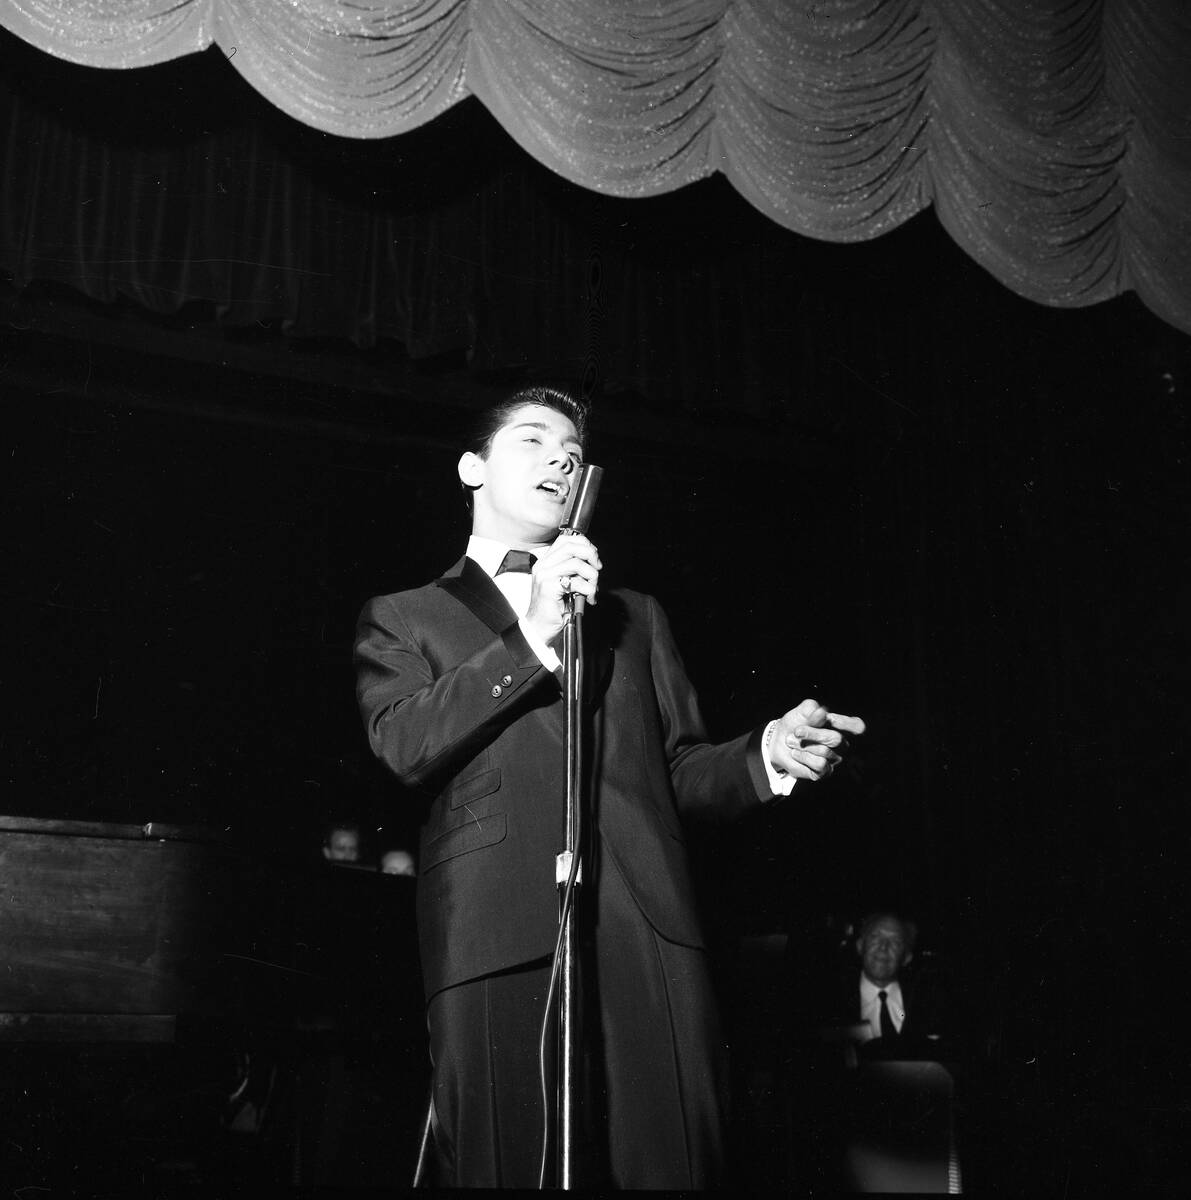 Paul Anka performs at the Sahara on Feb. 22, 1960. (Las Vegas News Bureau)